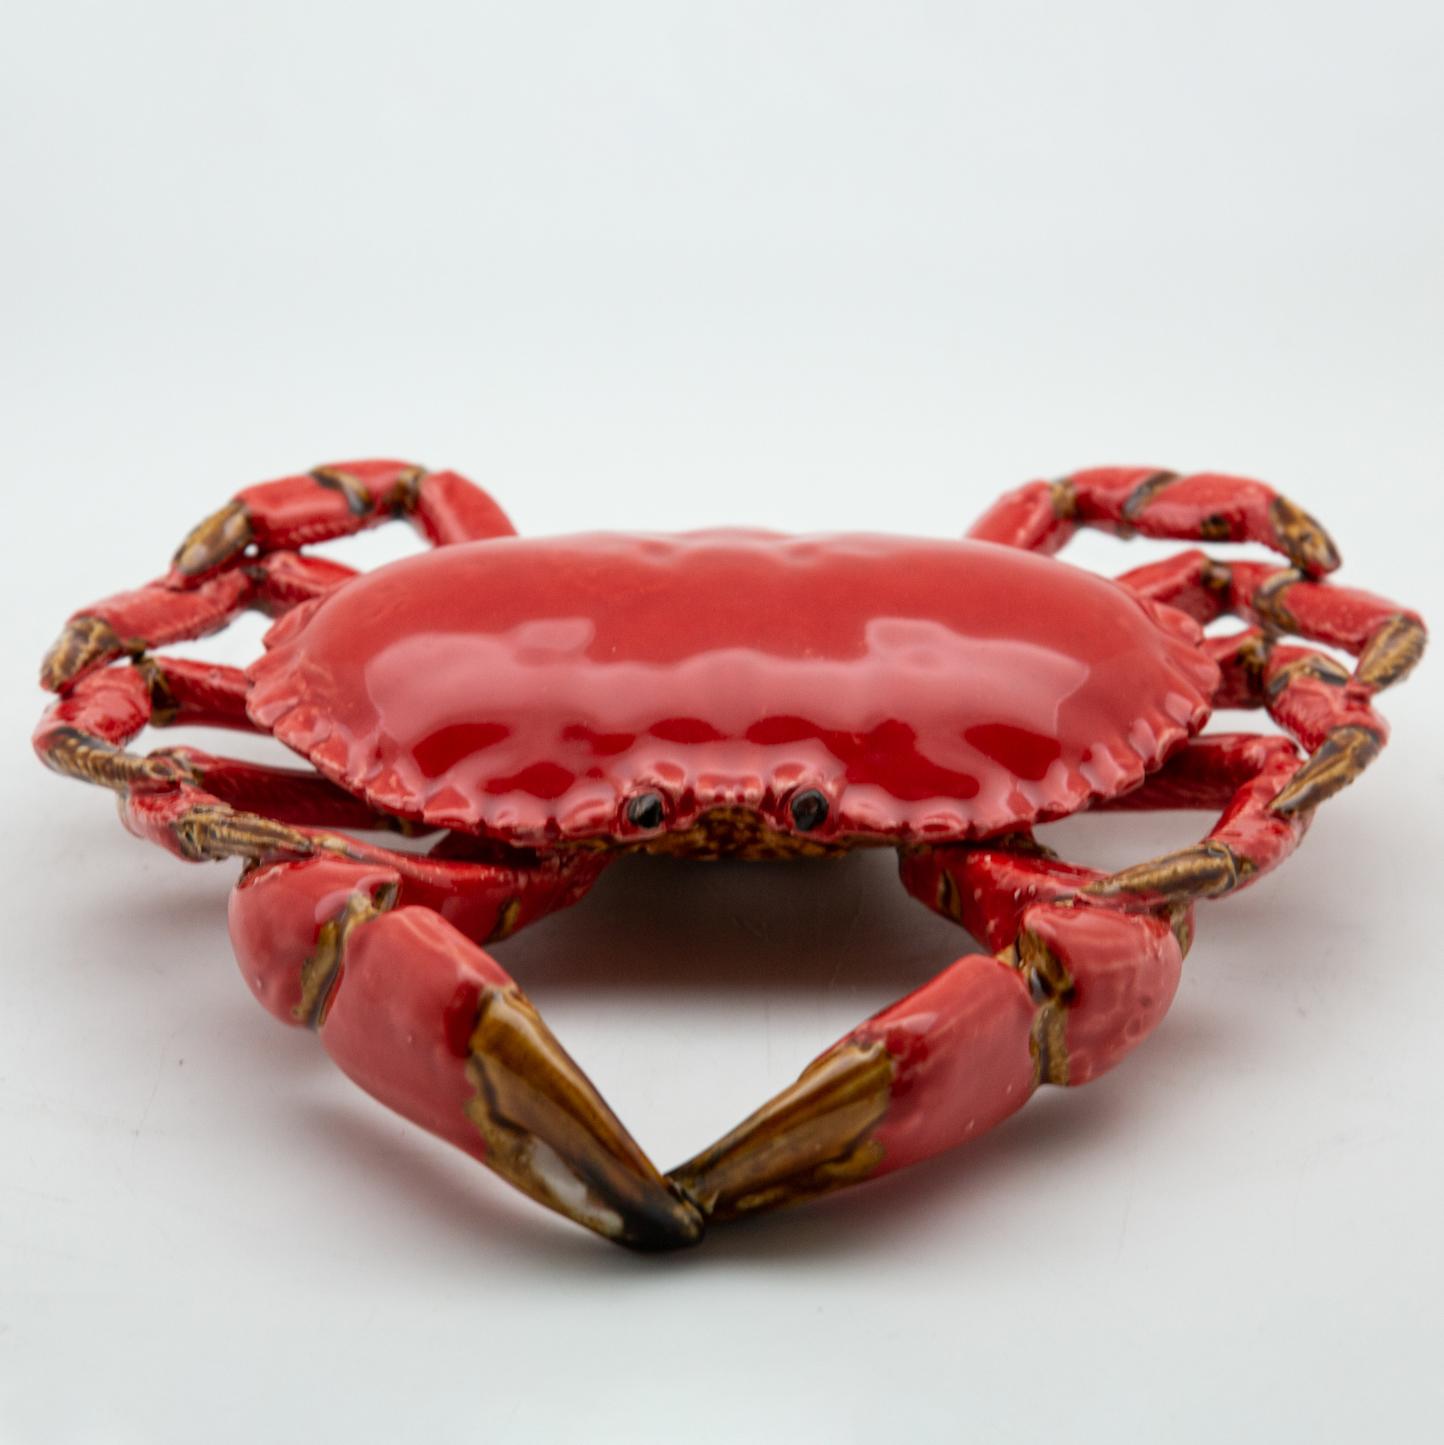 Contemporary Portuguese Handmade Pallissy or Majollica Red Ceramic Crab